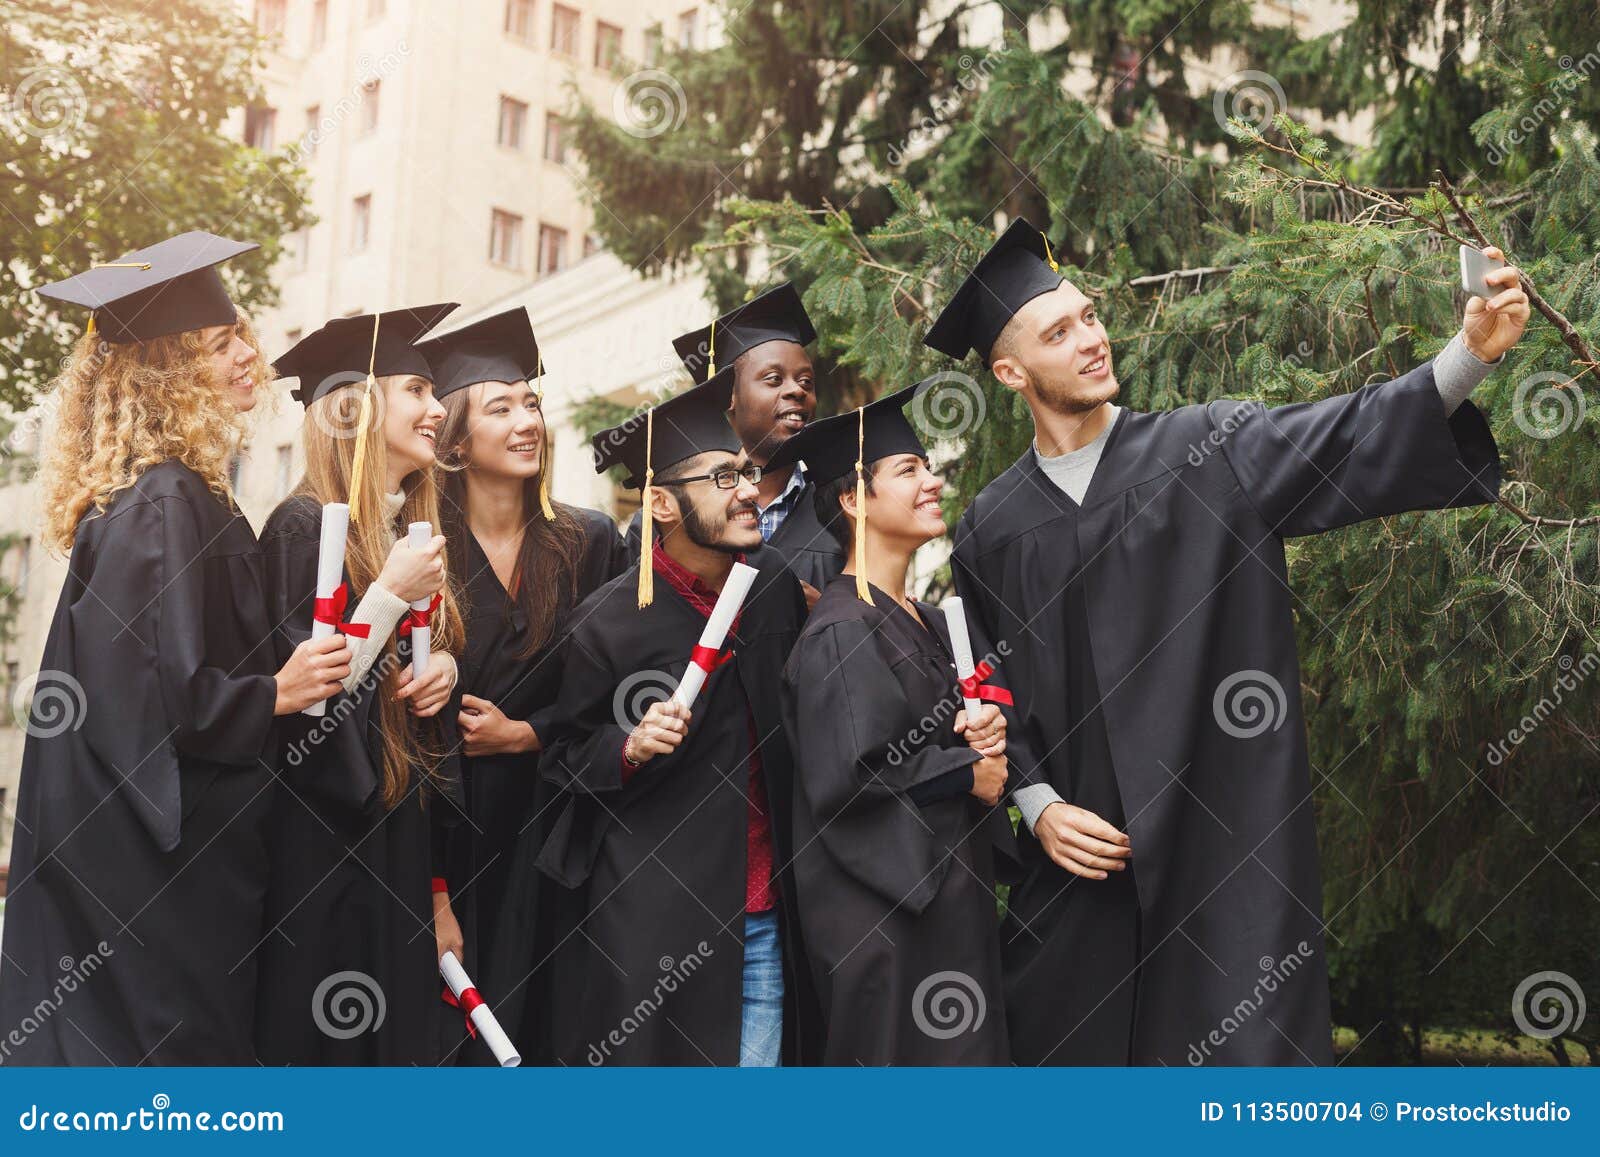 A Group Of Graduates Celebrating Stock Photo Image Of Grad Graduated